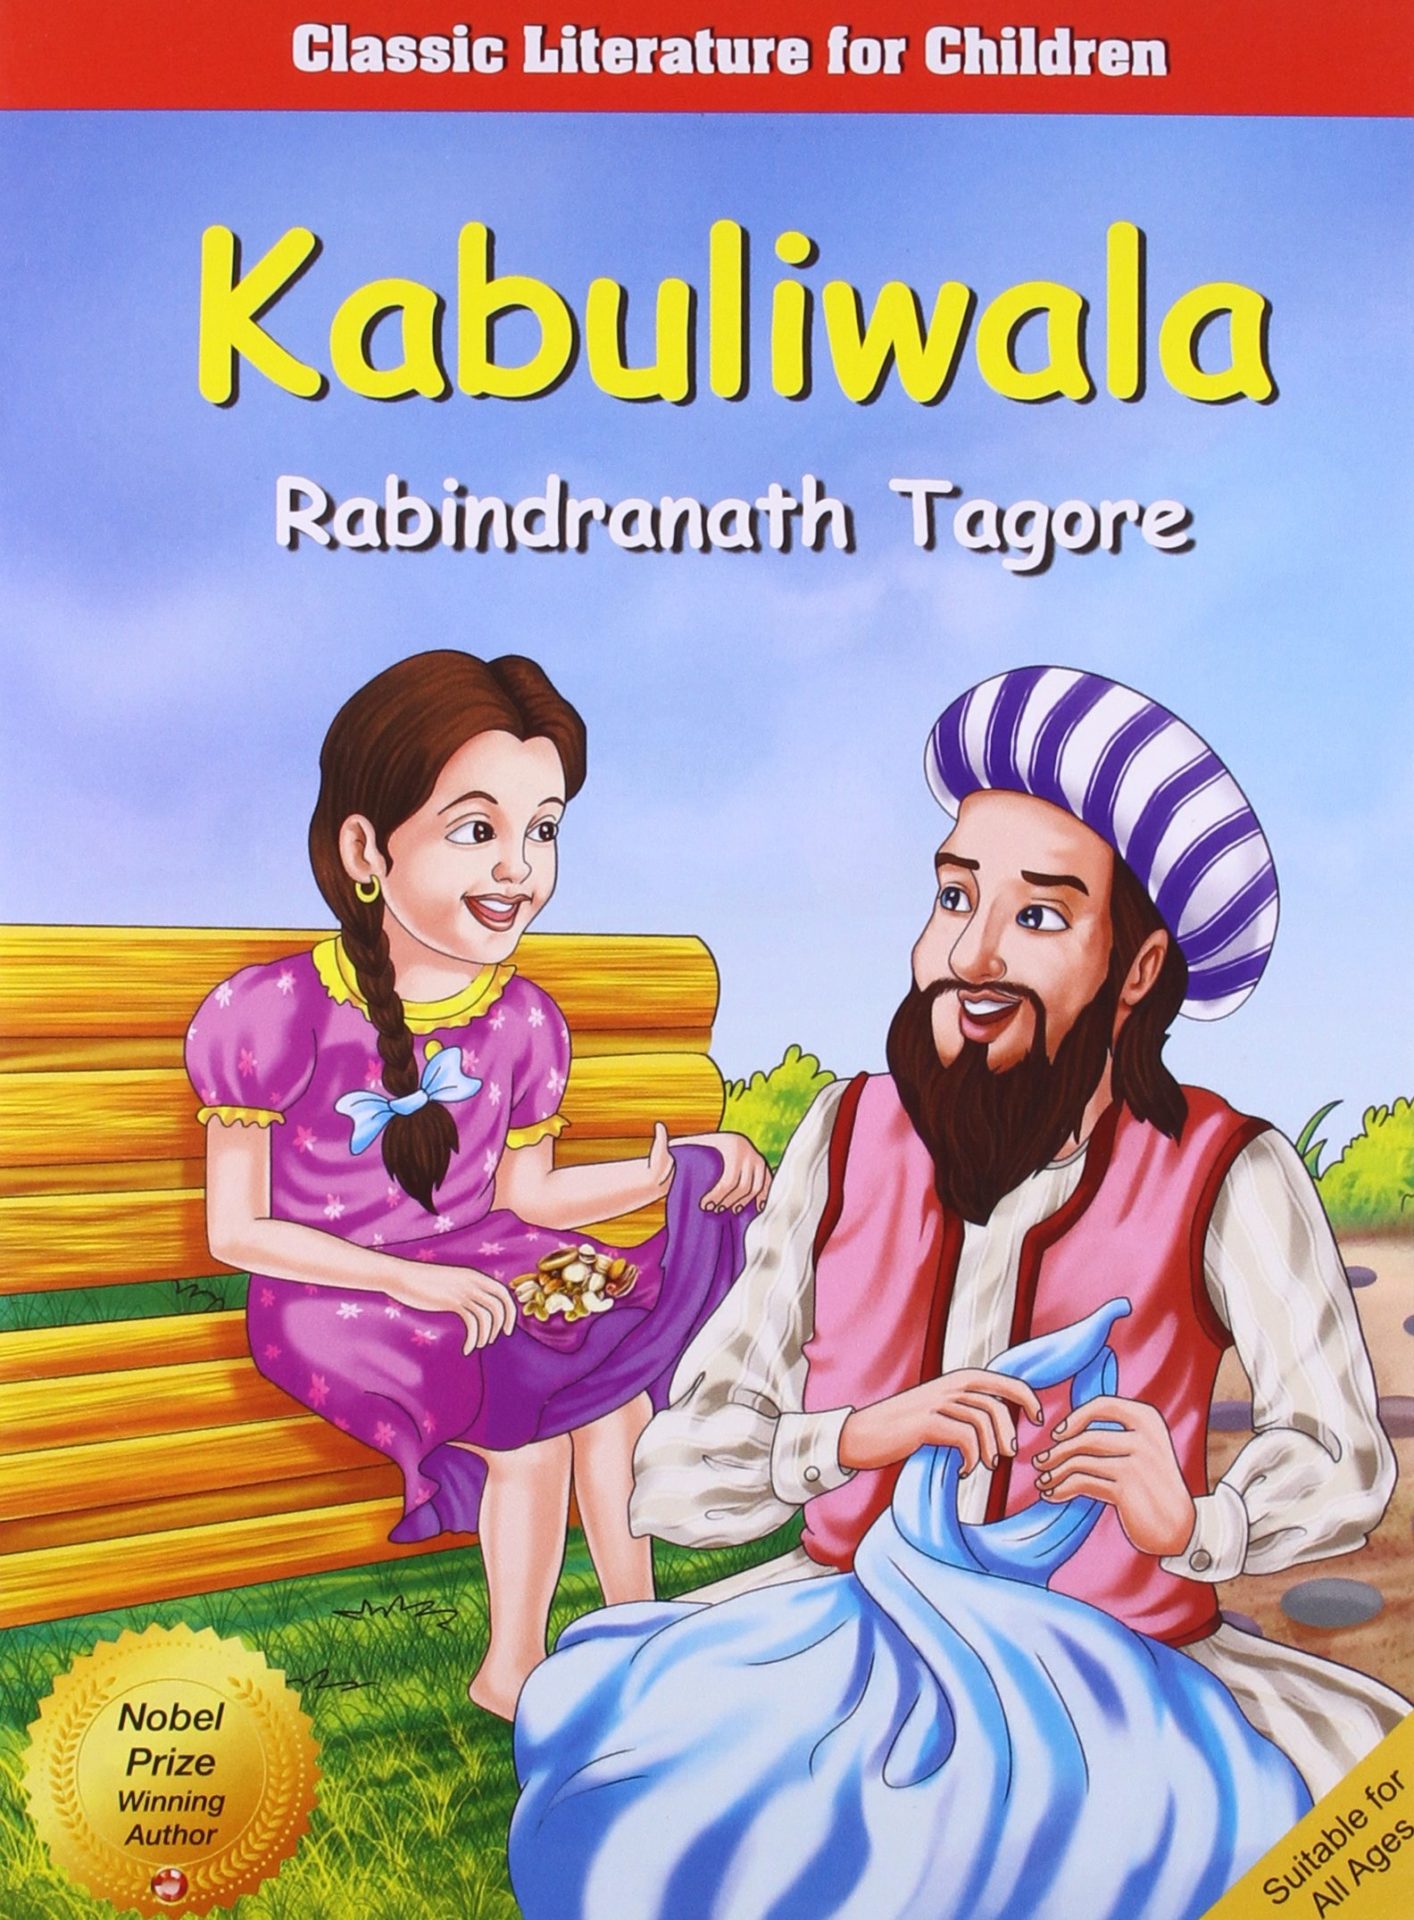 kabuliwala story book cover